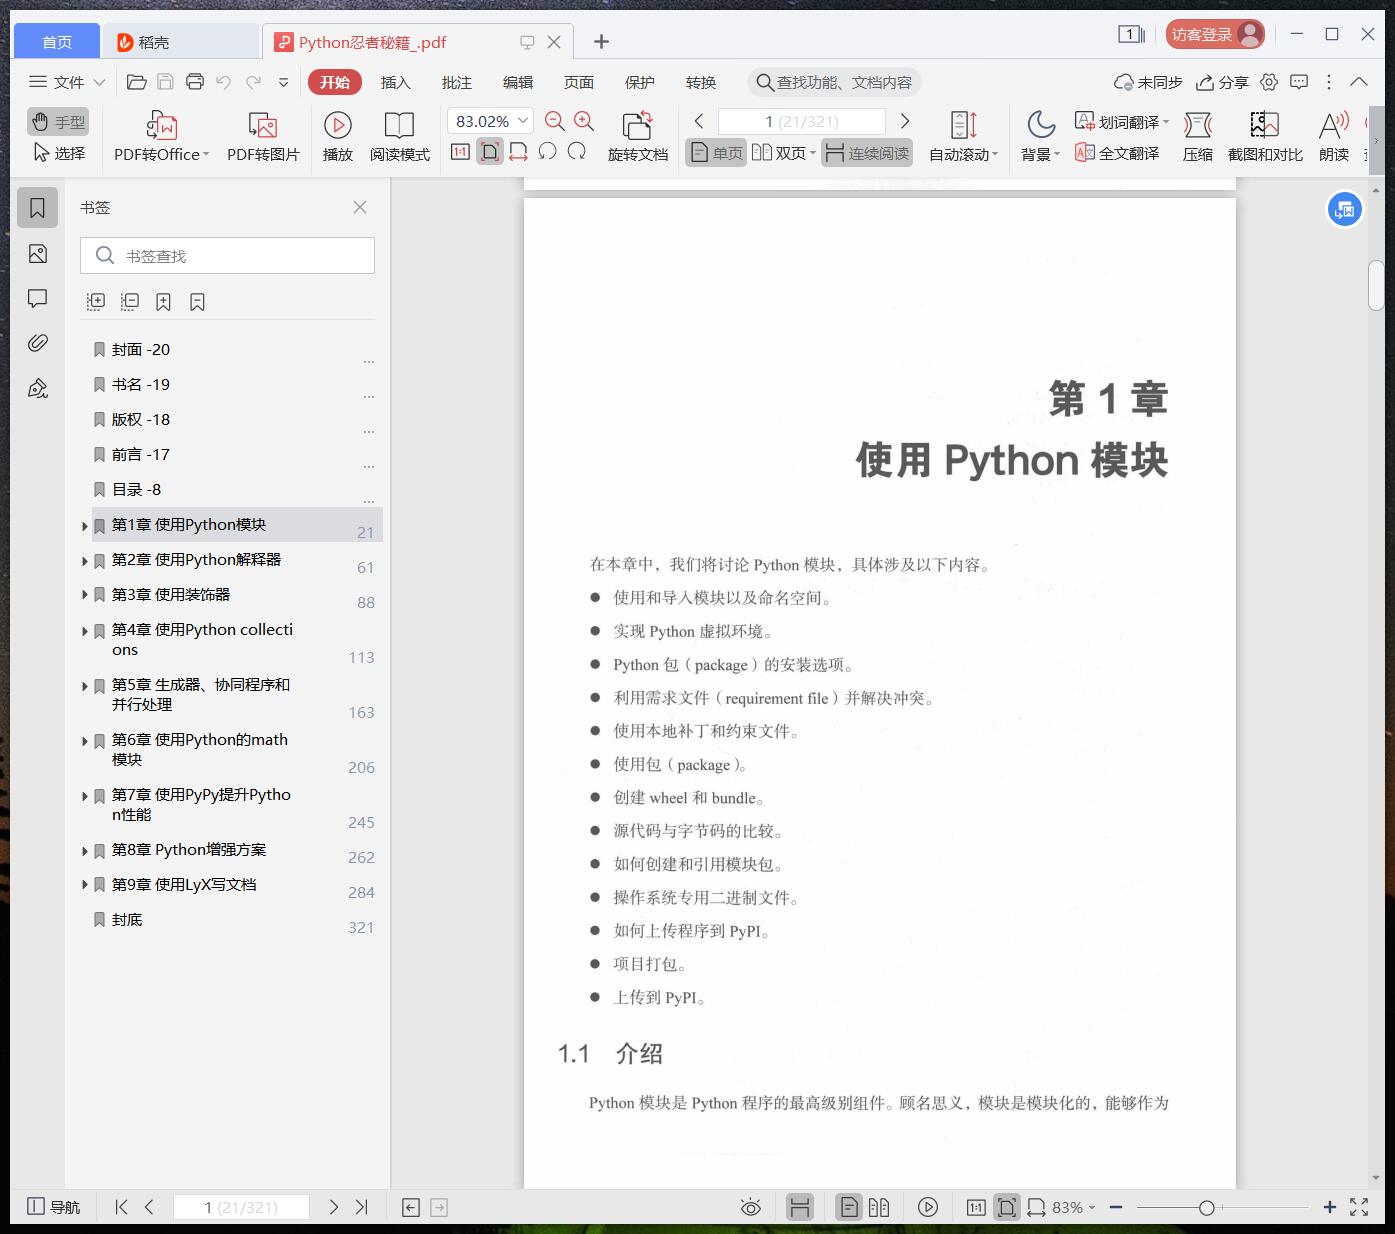 Python教程忍者秘籍pdf电子书籍下载百度网盘